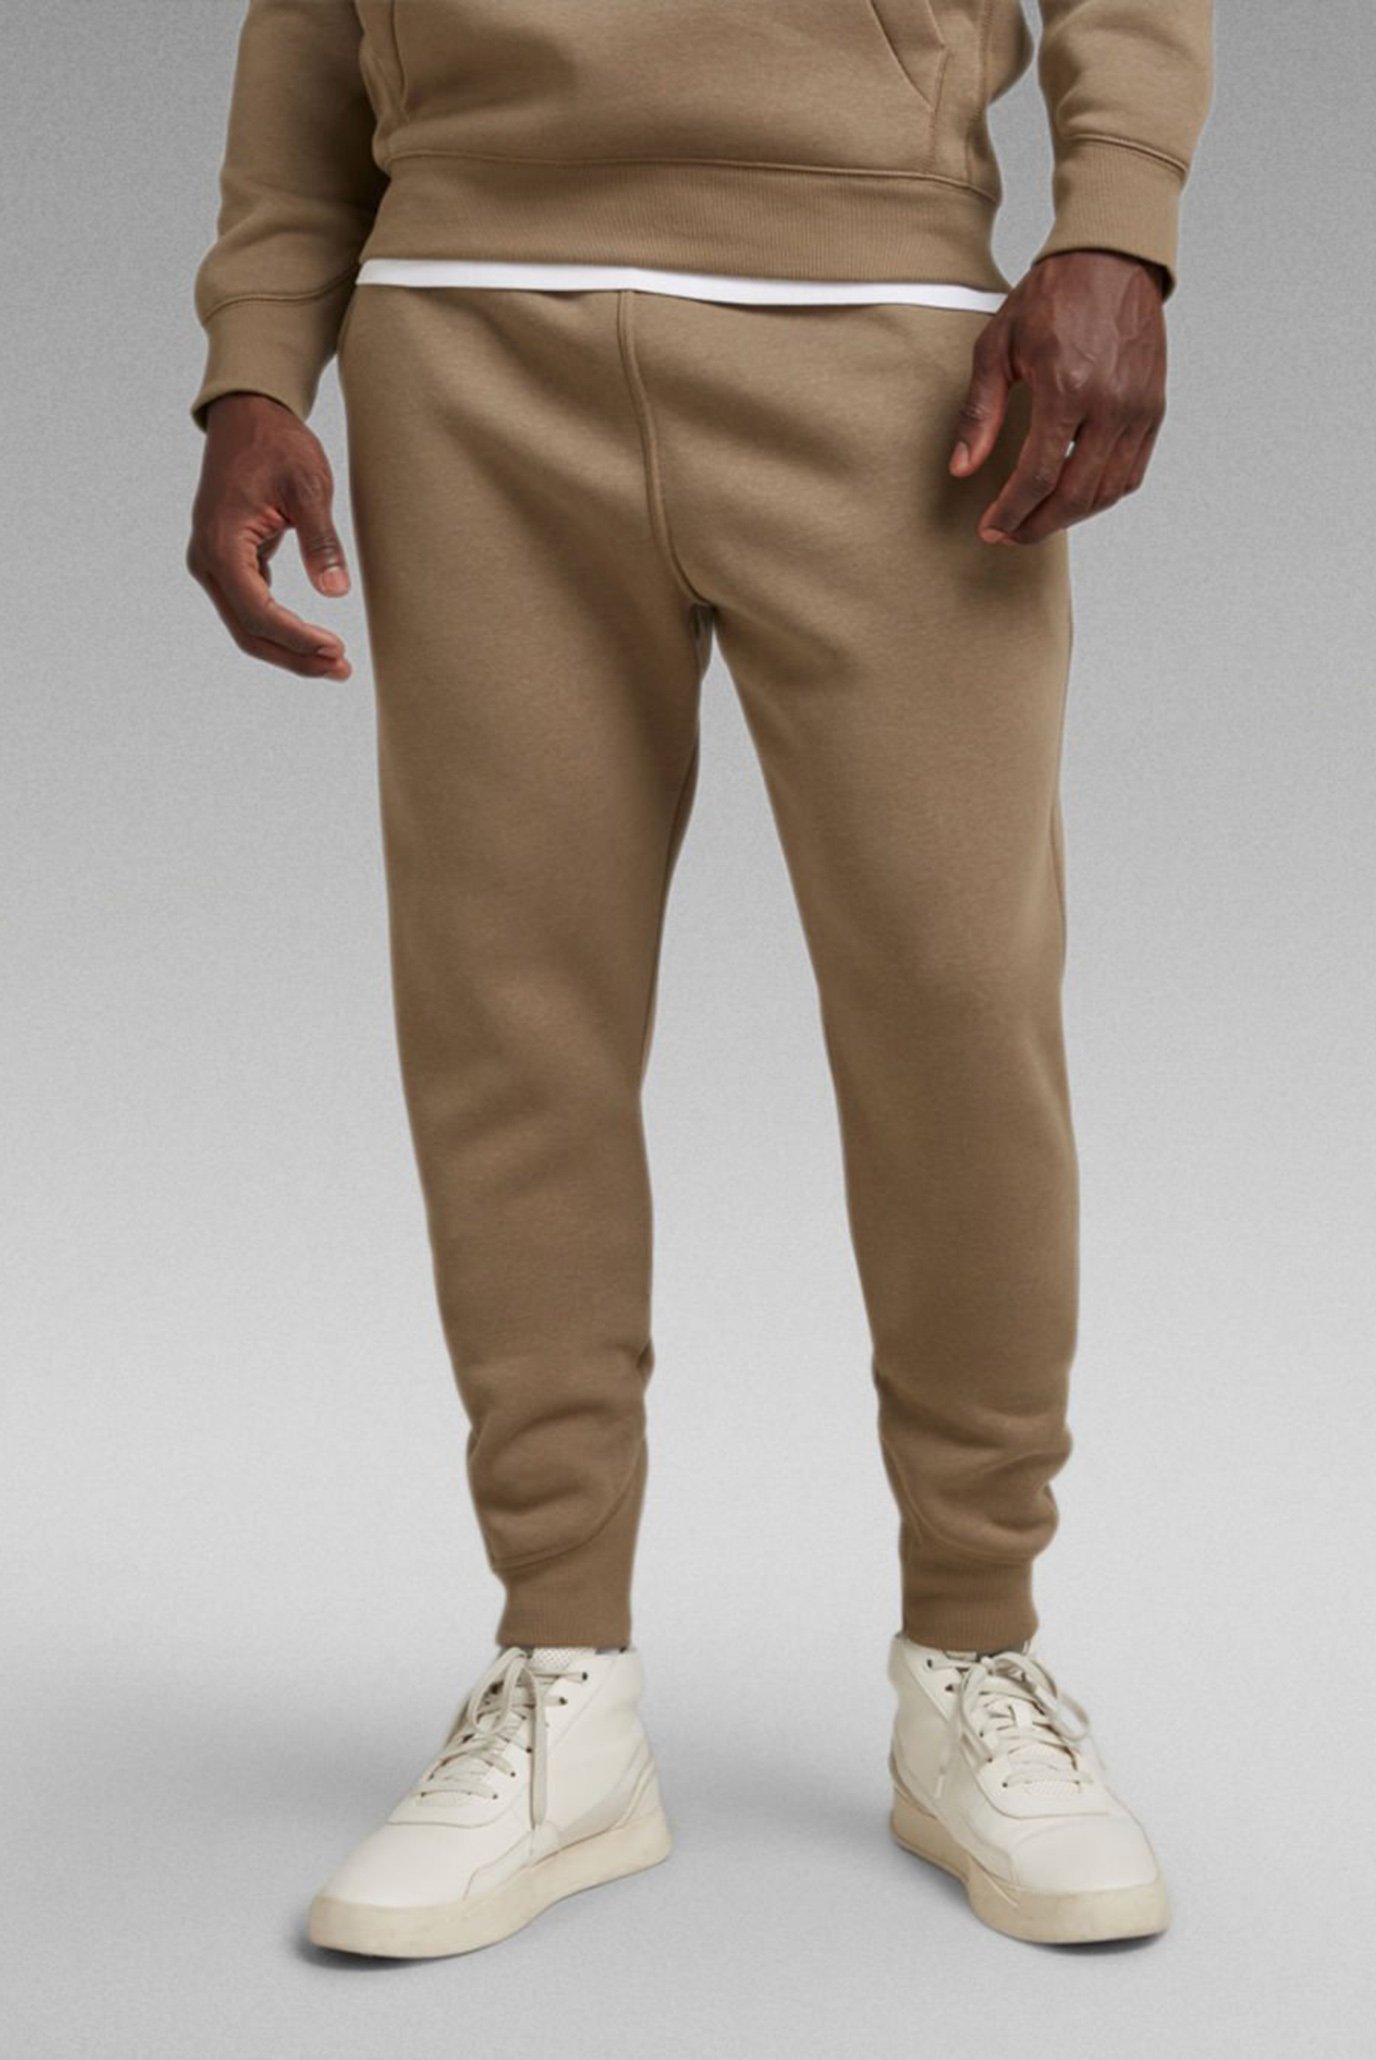 Мужские коричневые спортивные брюки Premium core type 1